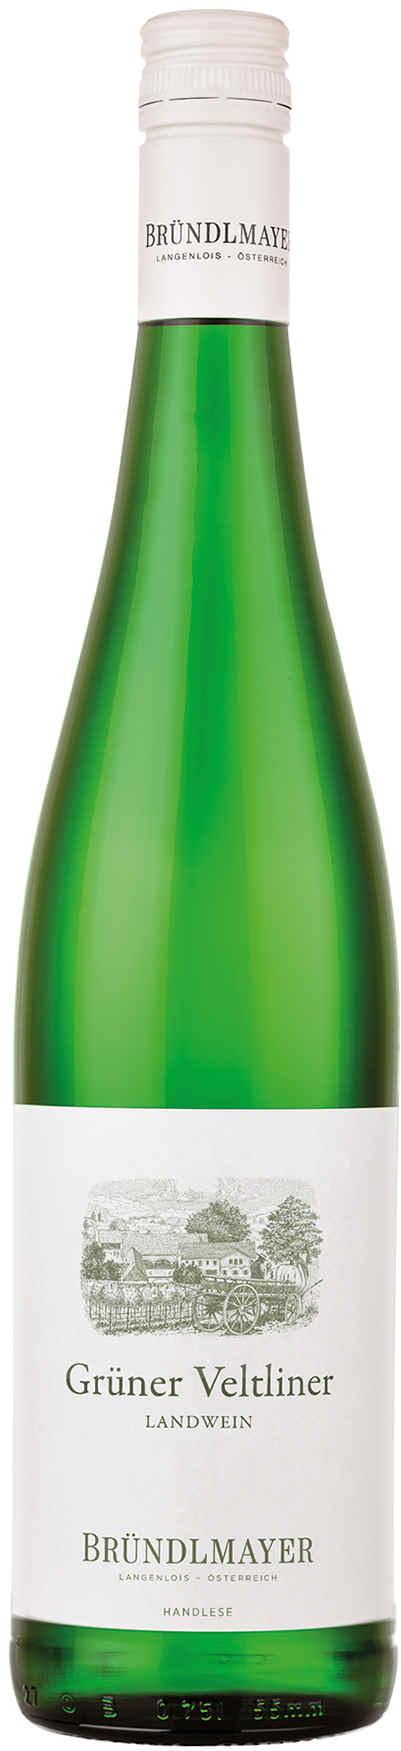 Weingut Bründlmayer Grüner Veltliner Landwein